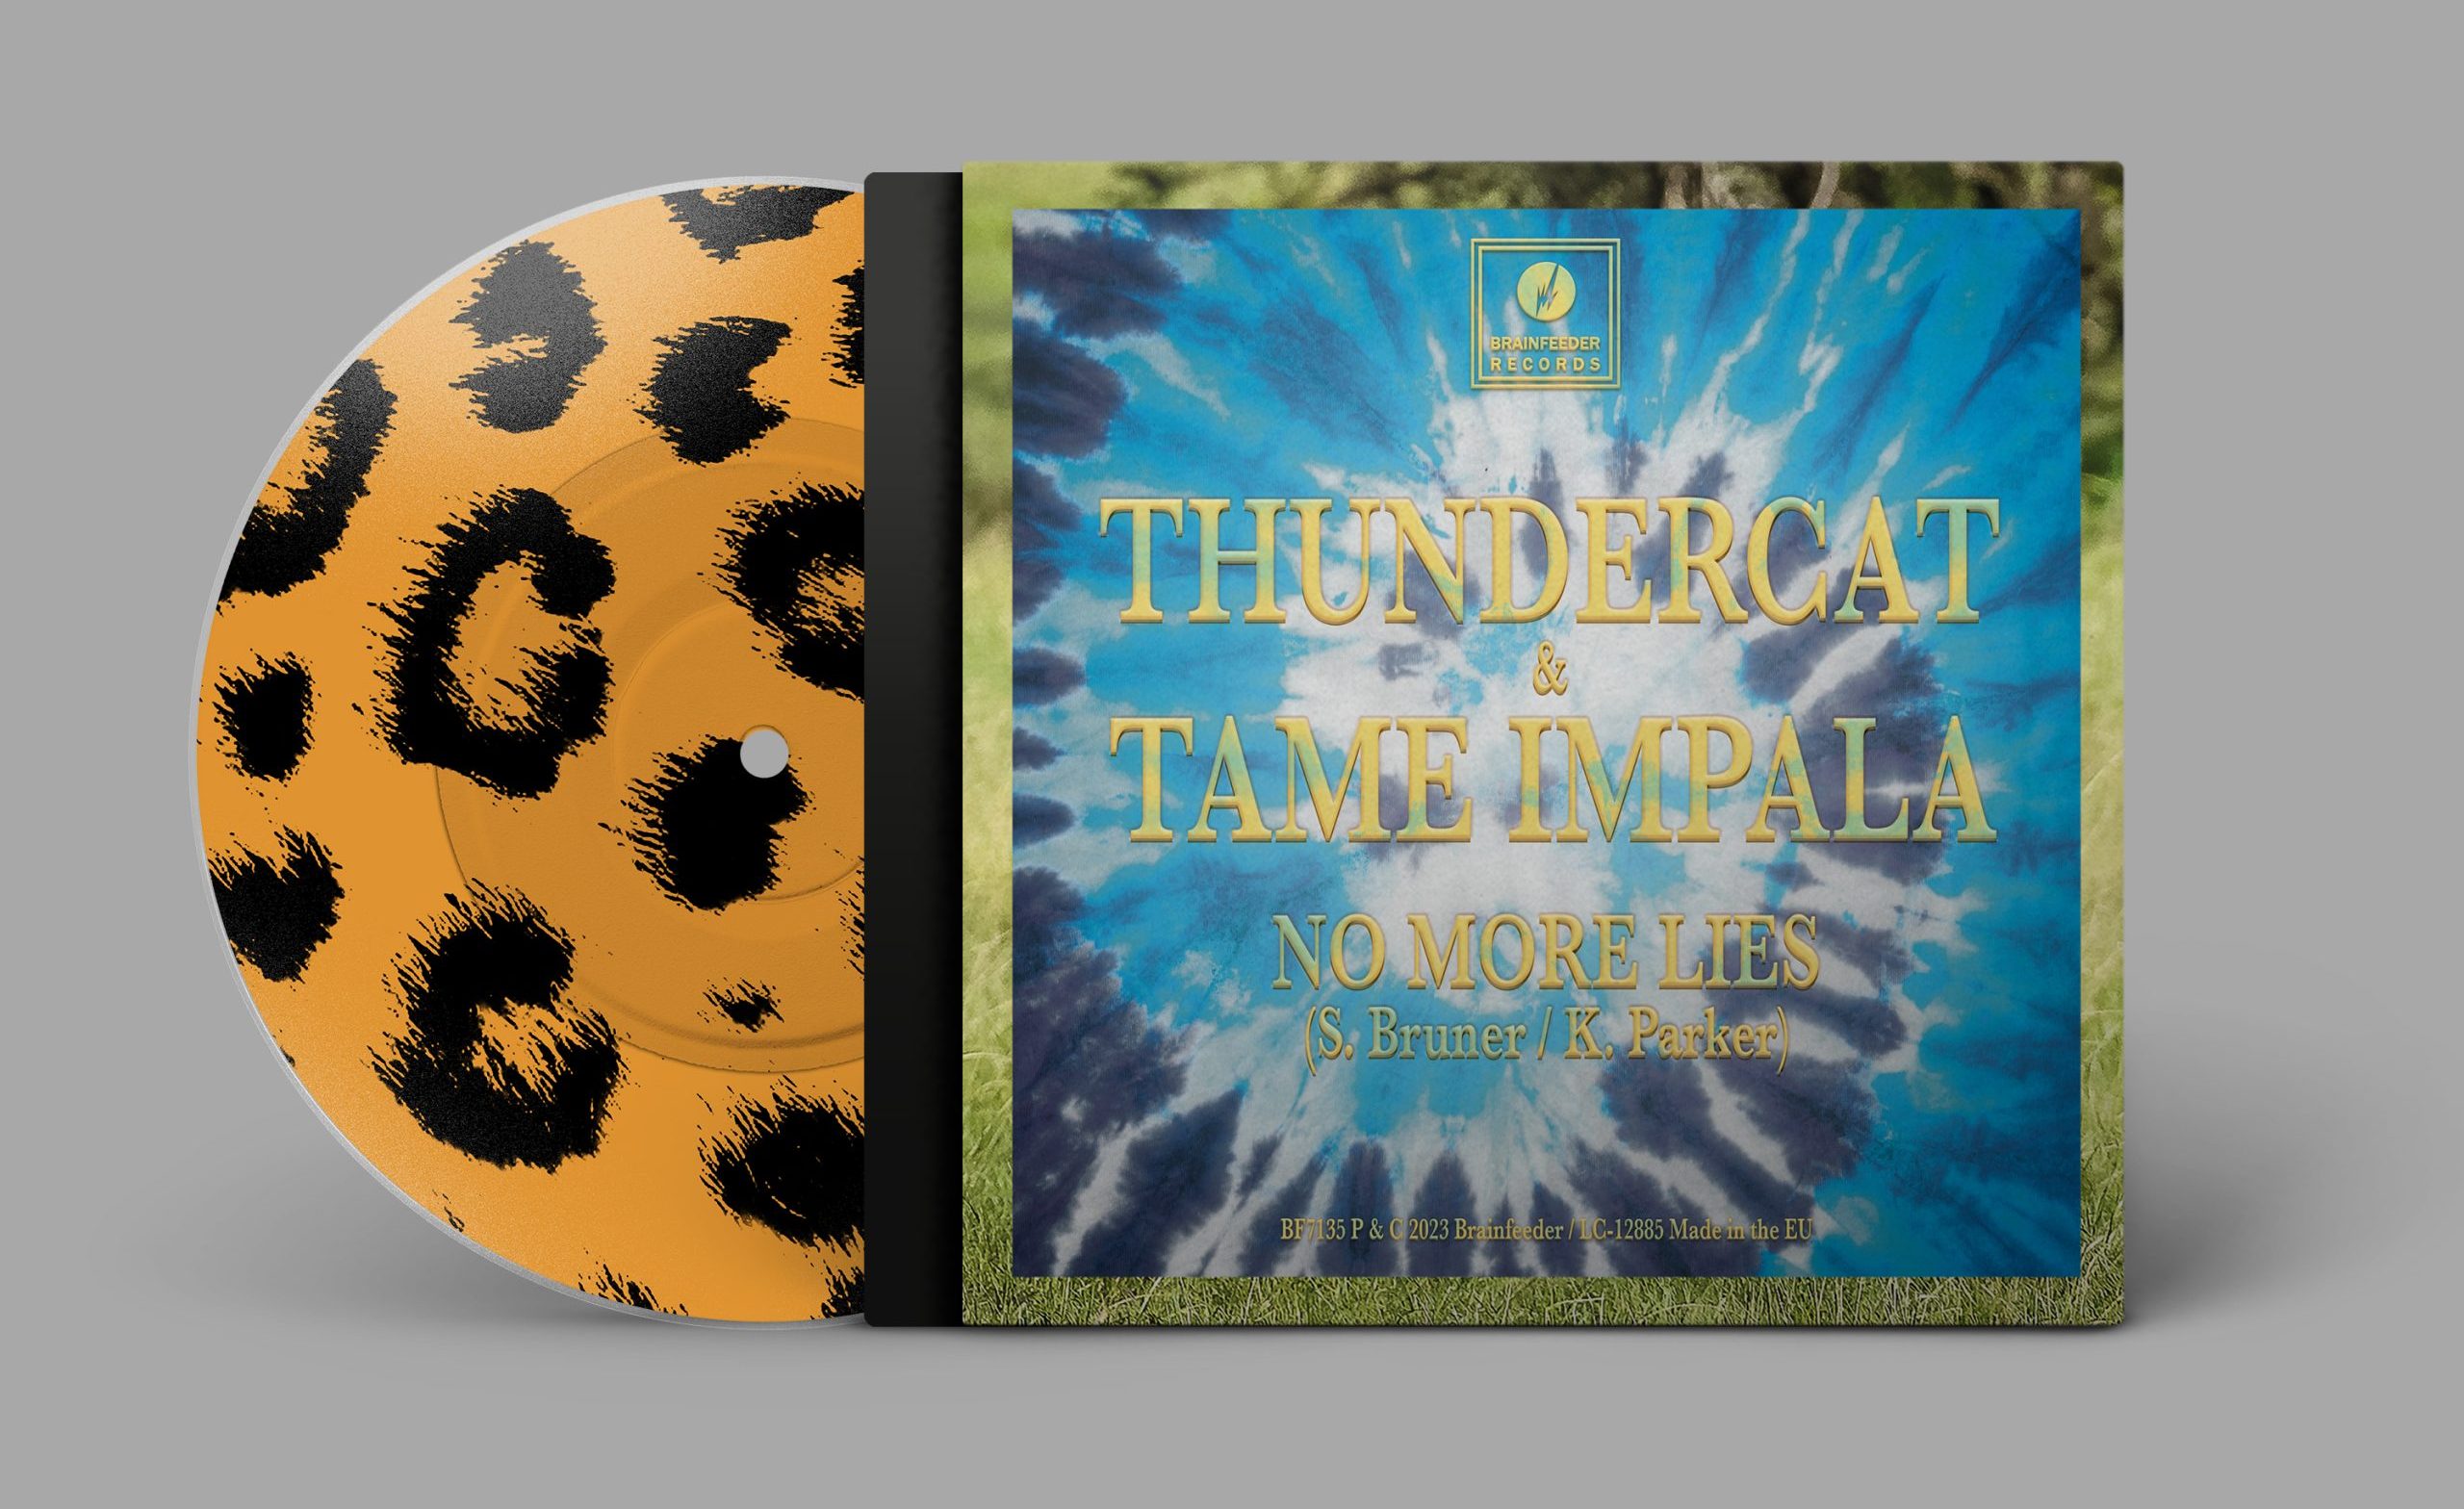 tame impala thundercat vinyl